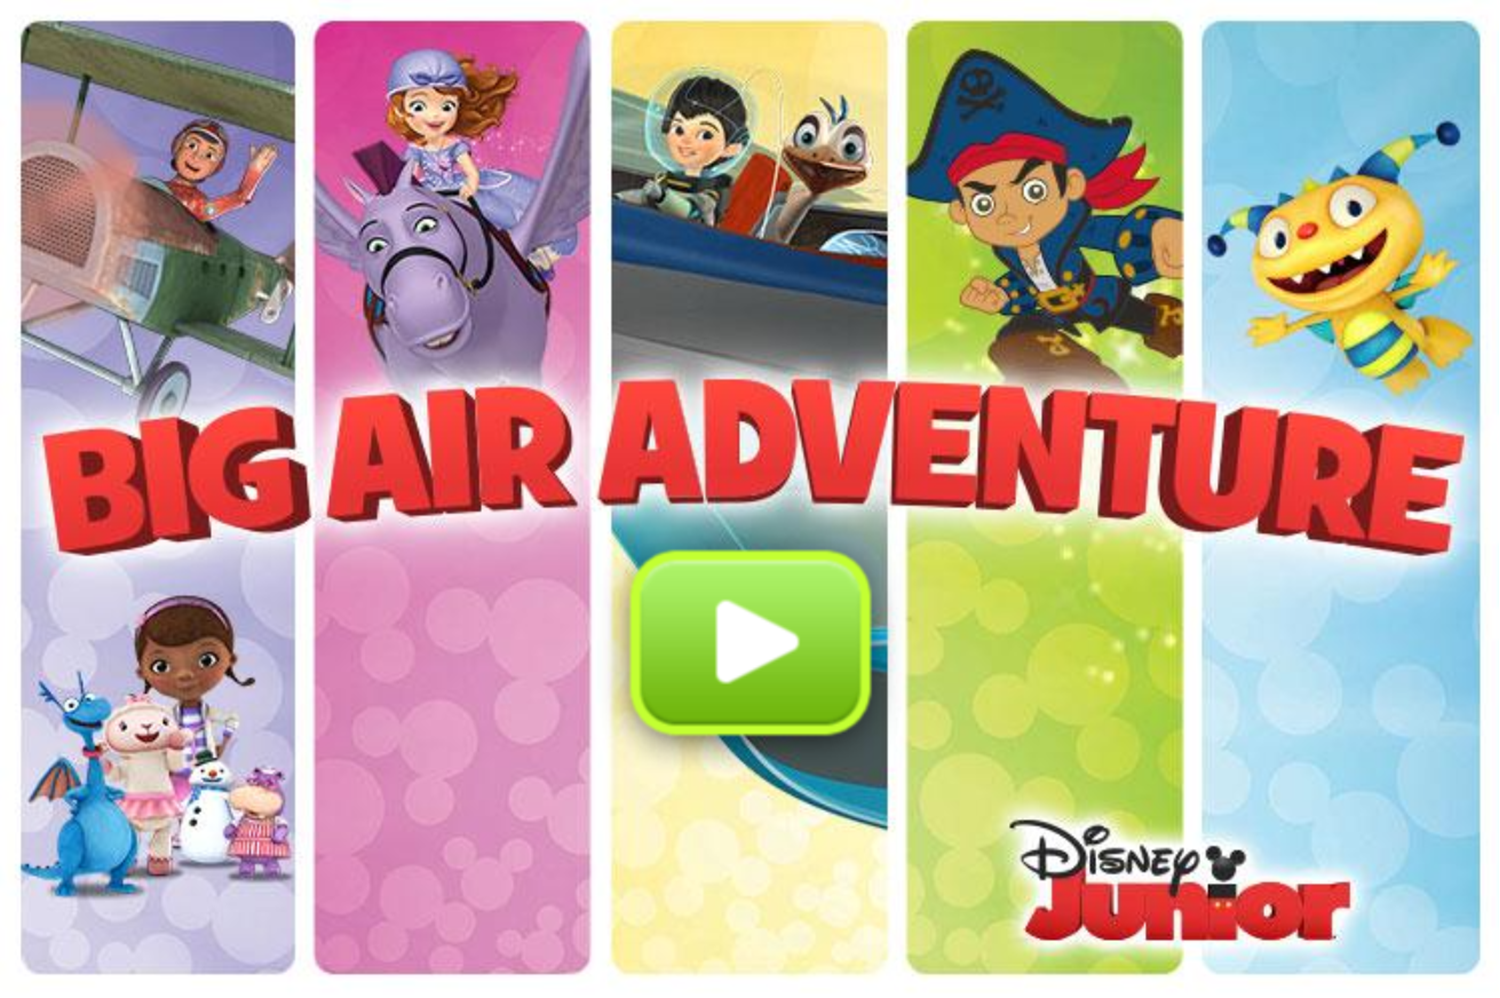 Disney Jr Big Air Adventure Game Welcome Screen Screenshot.